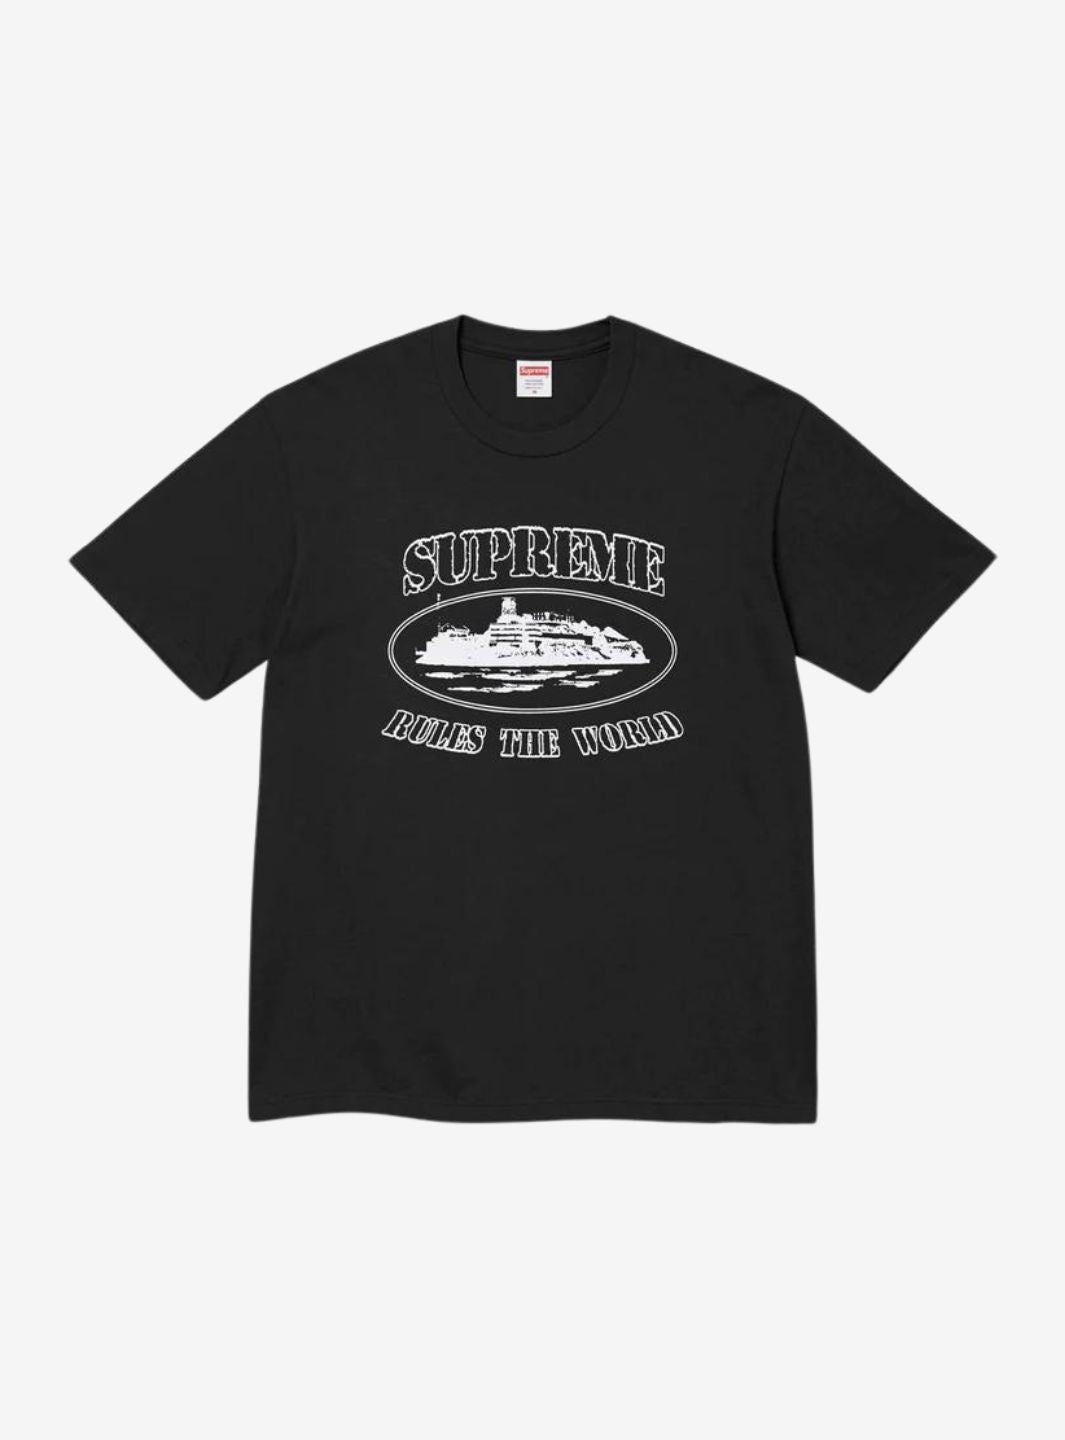 Supreme x Corteiz T-Shirt Rules The World